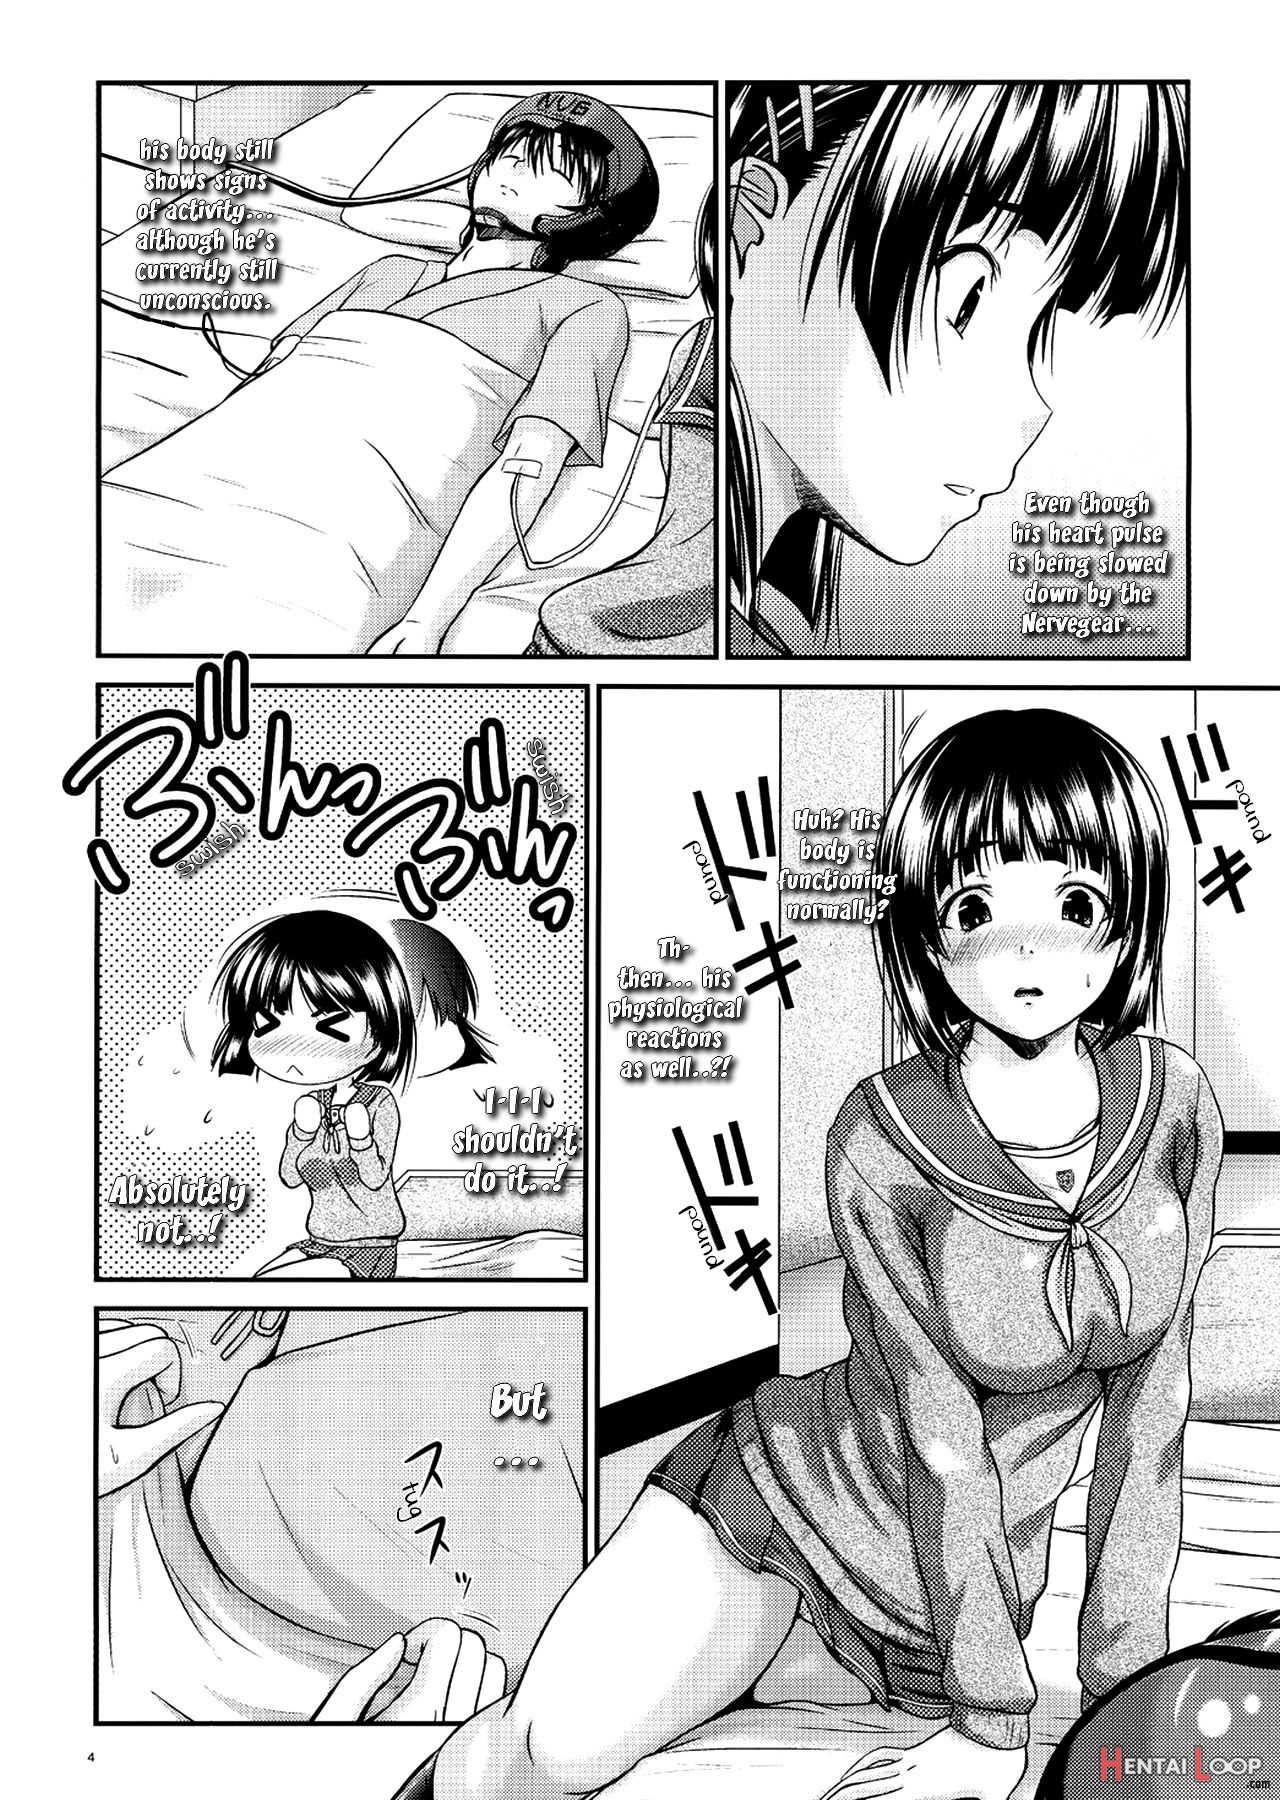 Suguha's Secret page 3